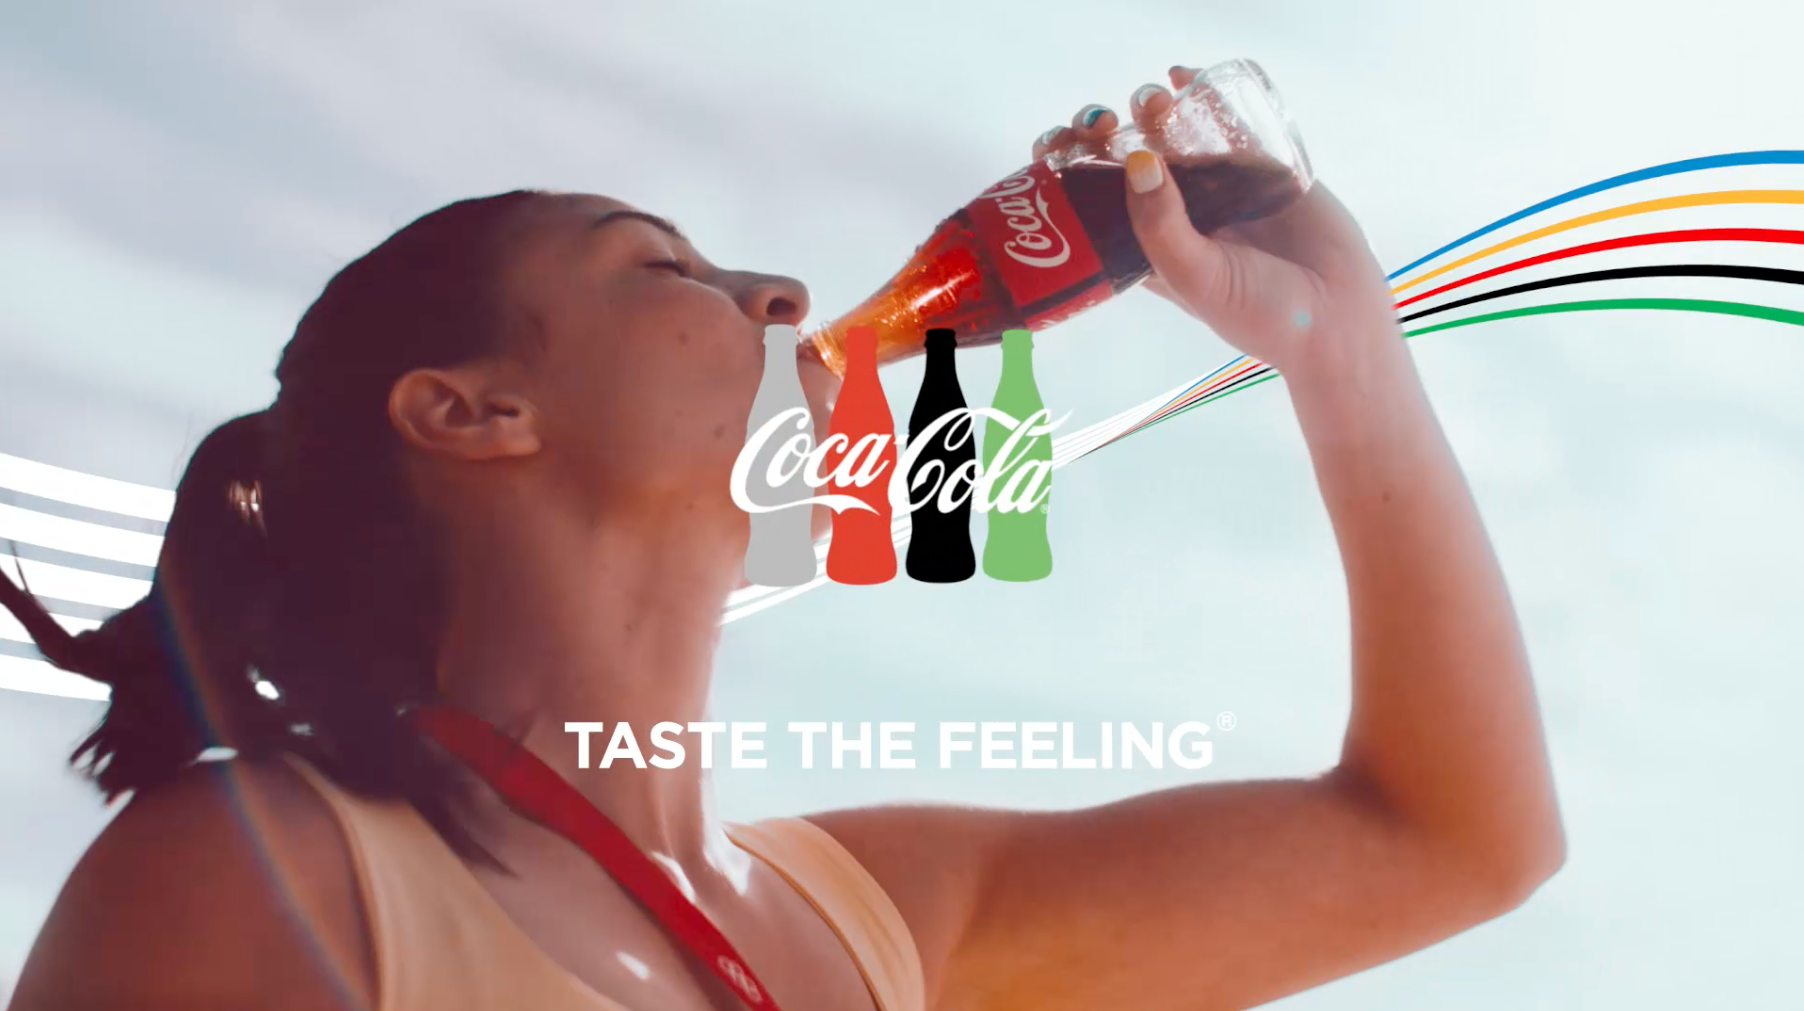 Coca Cola taste the feeling. Девушка с Кока колой. Эмоции в рекламе Кока колы. Реклама Кока колы с девушкой на пляже. Taste the feeling